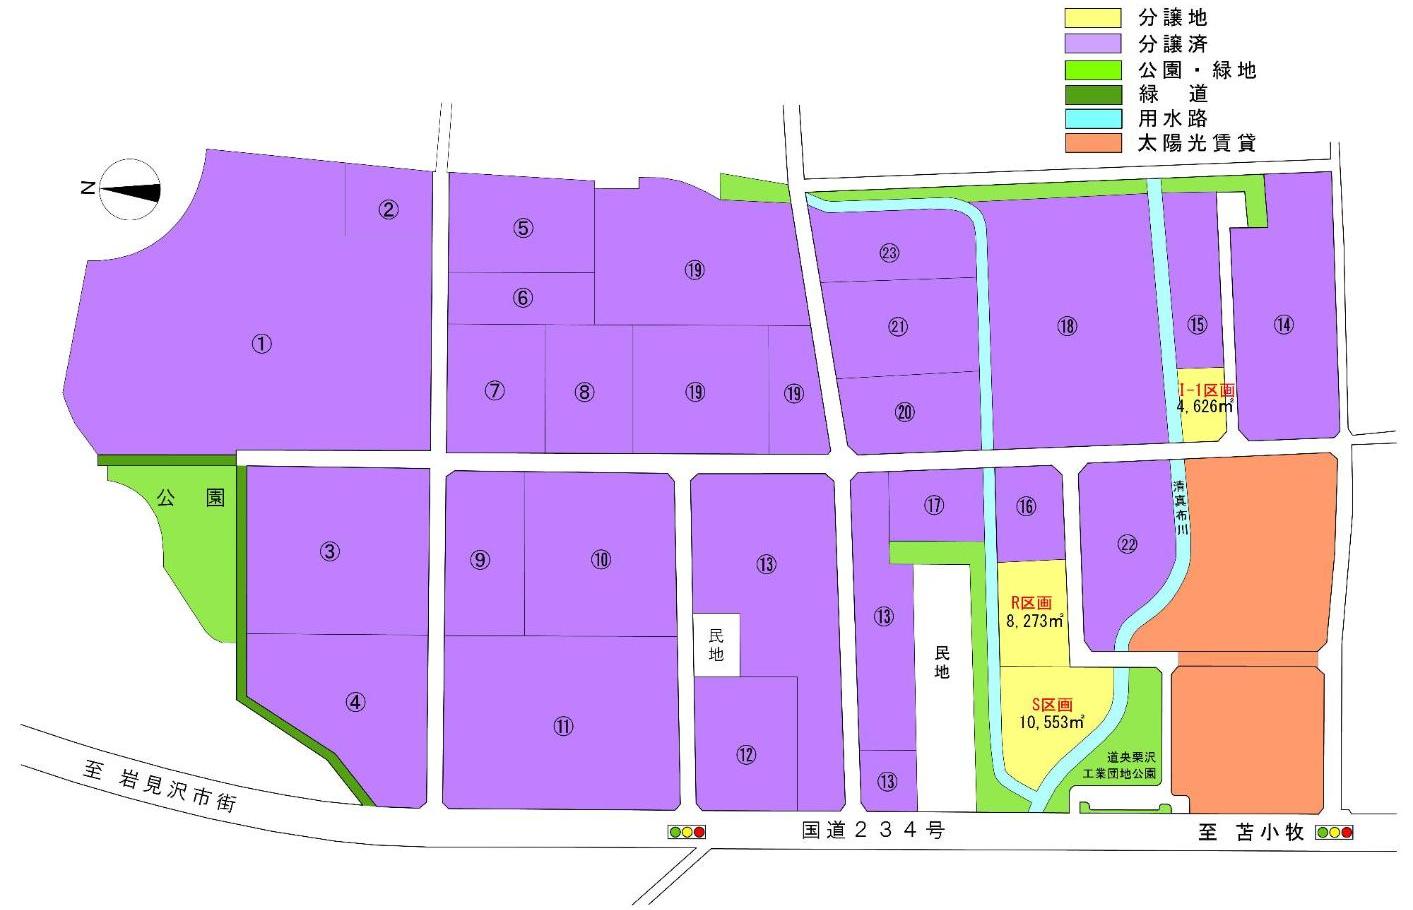 道央栗沢工業団地の区画図 詳細は以下